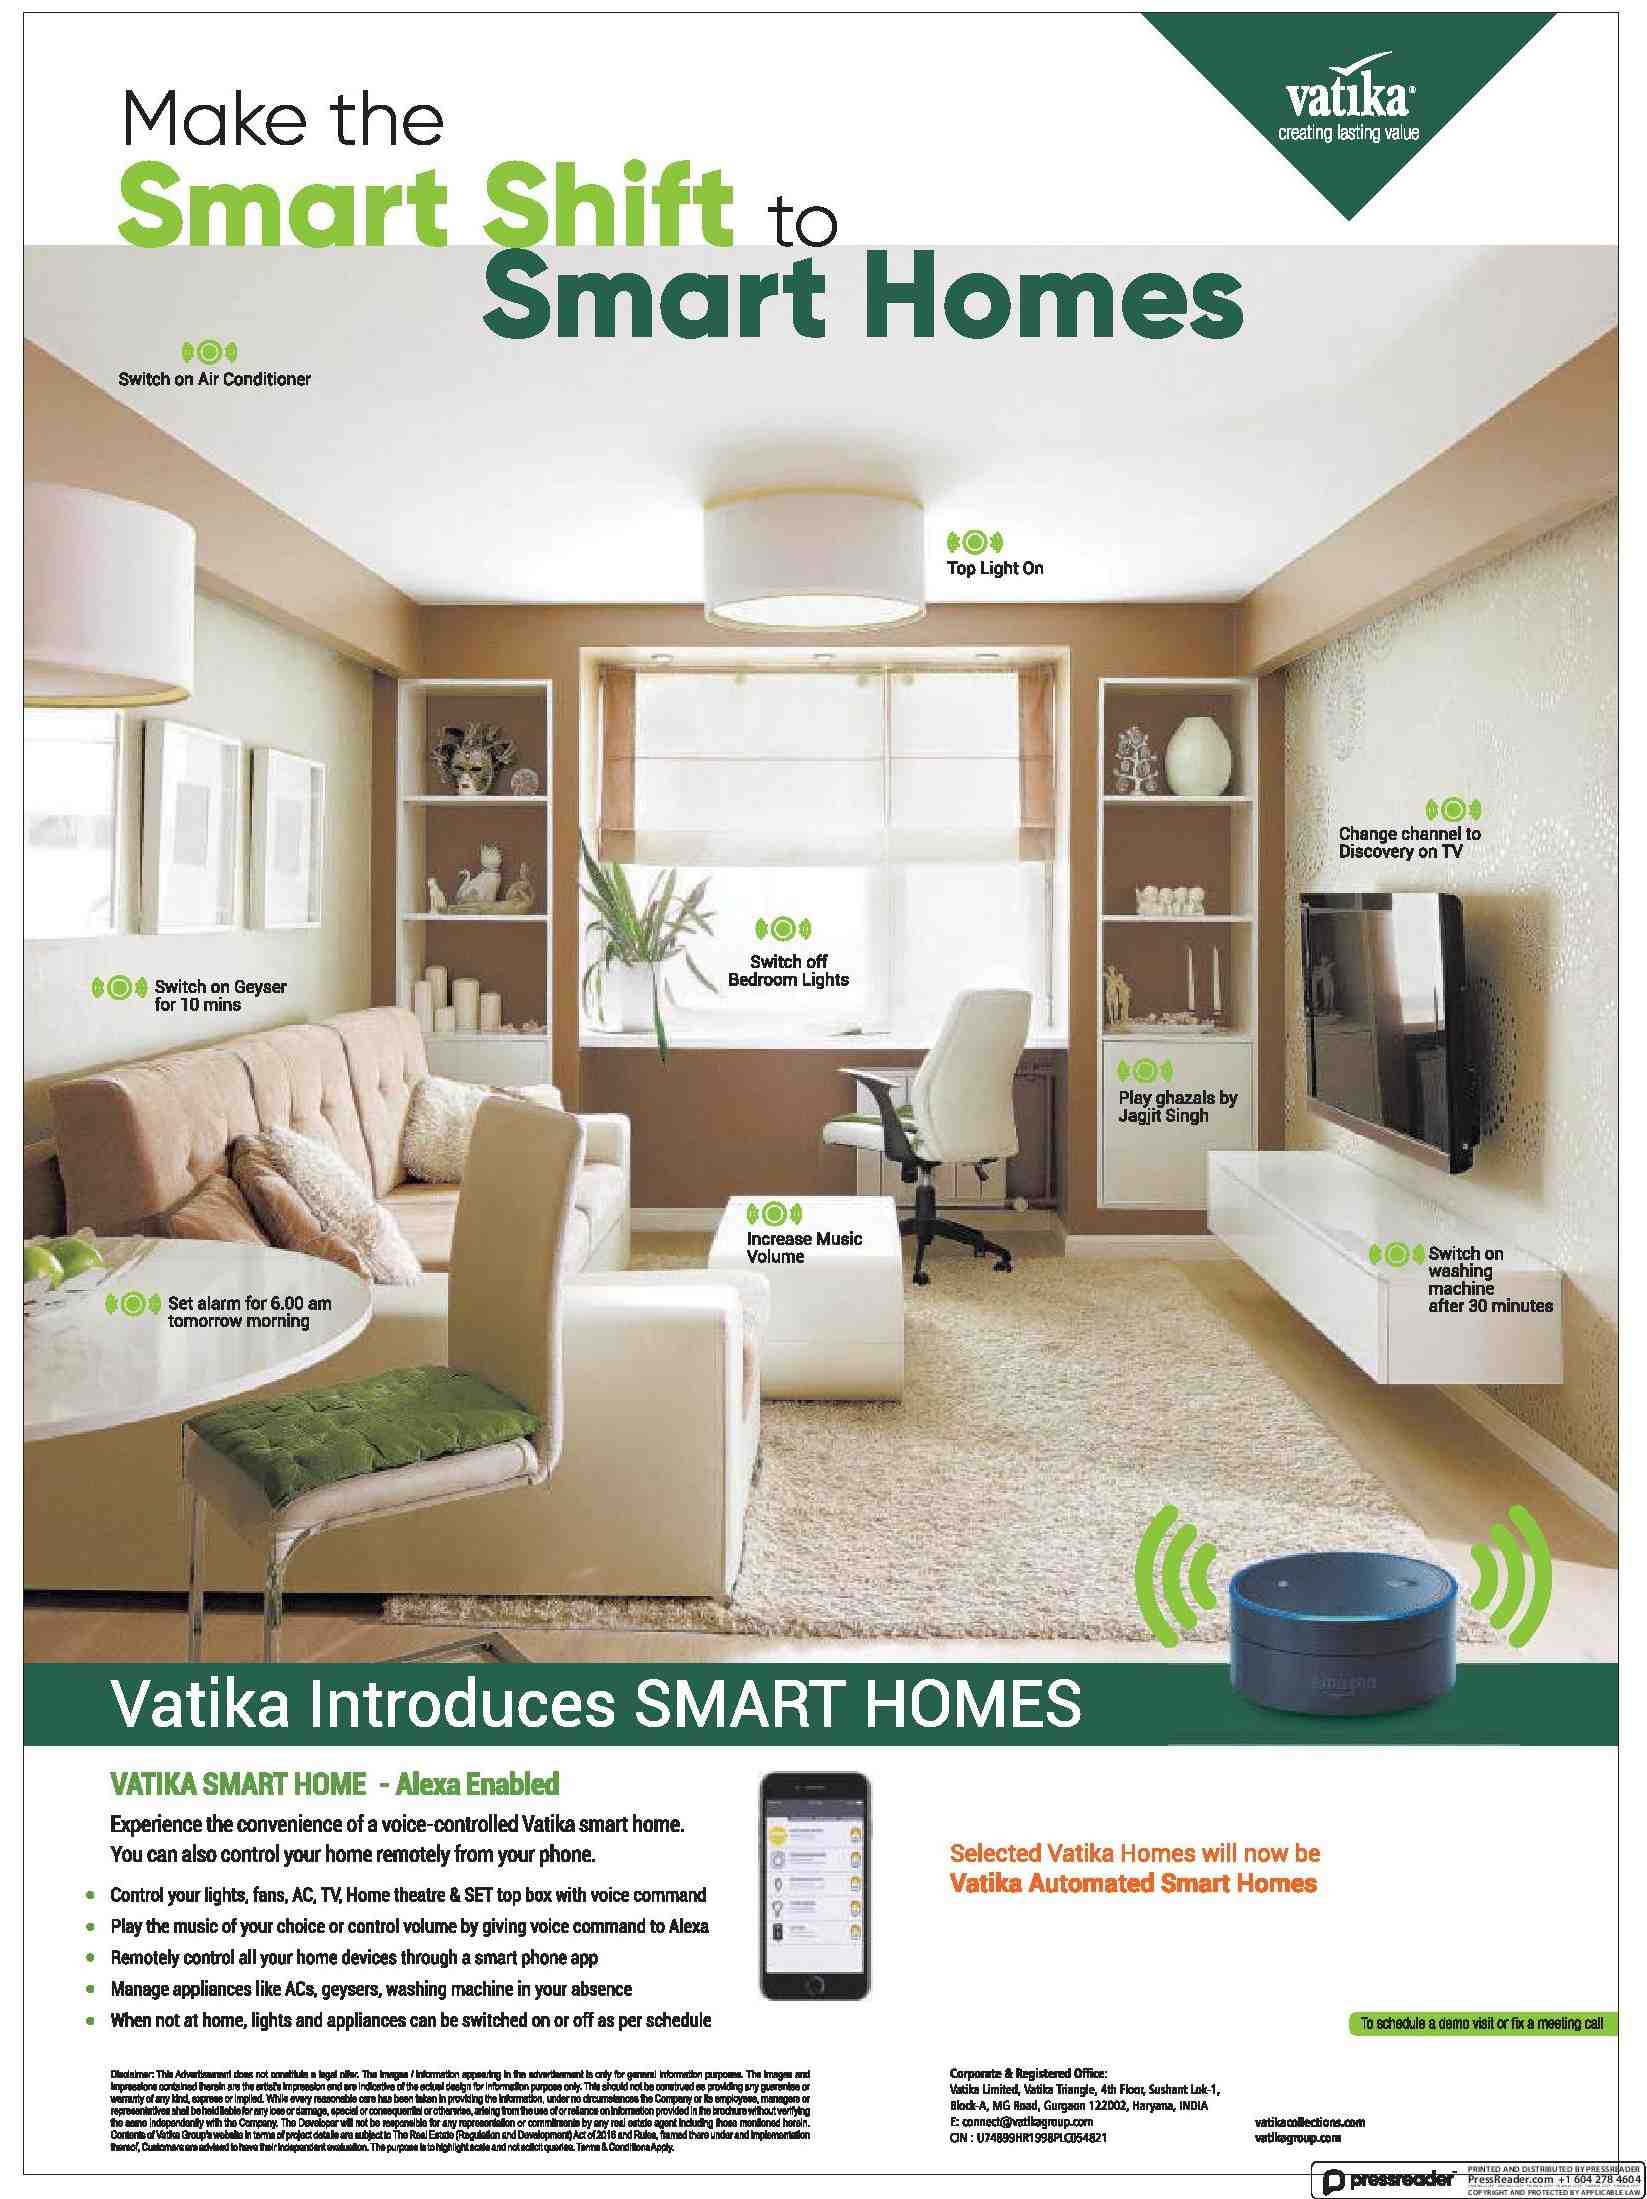 Vatika introduces smart homes in Gurgaon